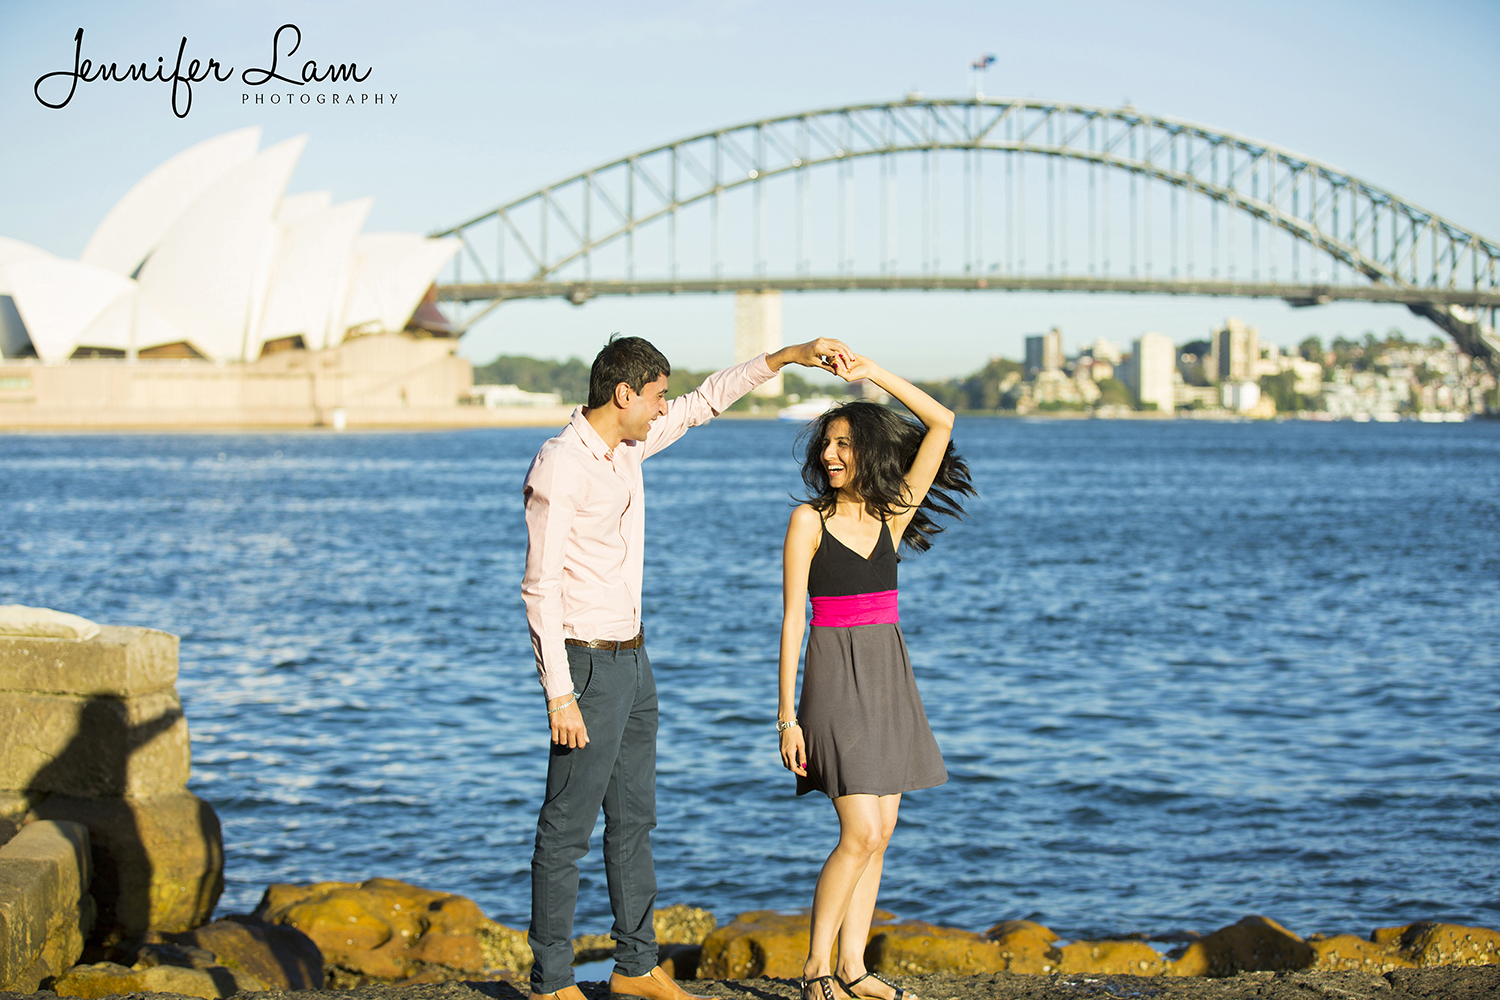 S&J - Jennifer Lam Photography - Sydney Wedding Photographer (3).jpg